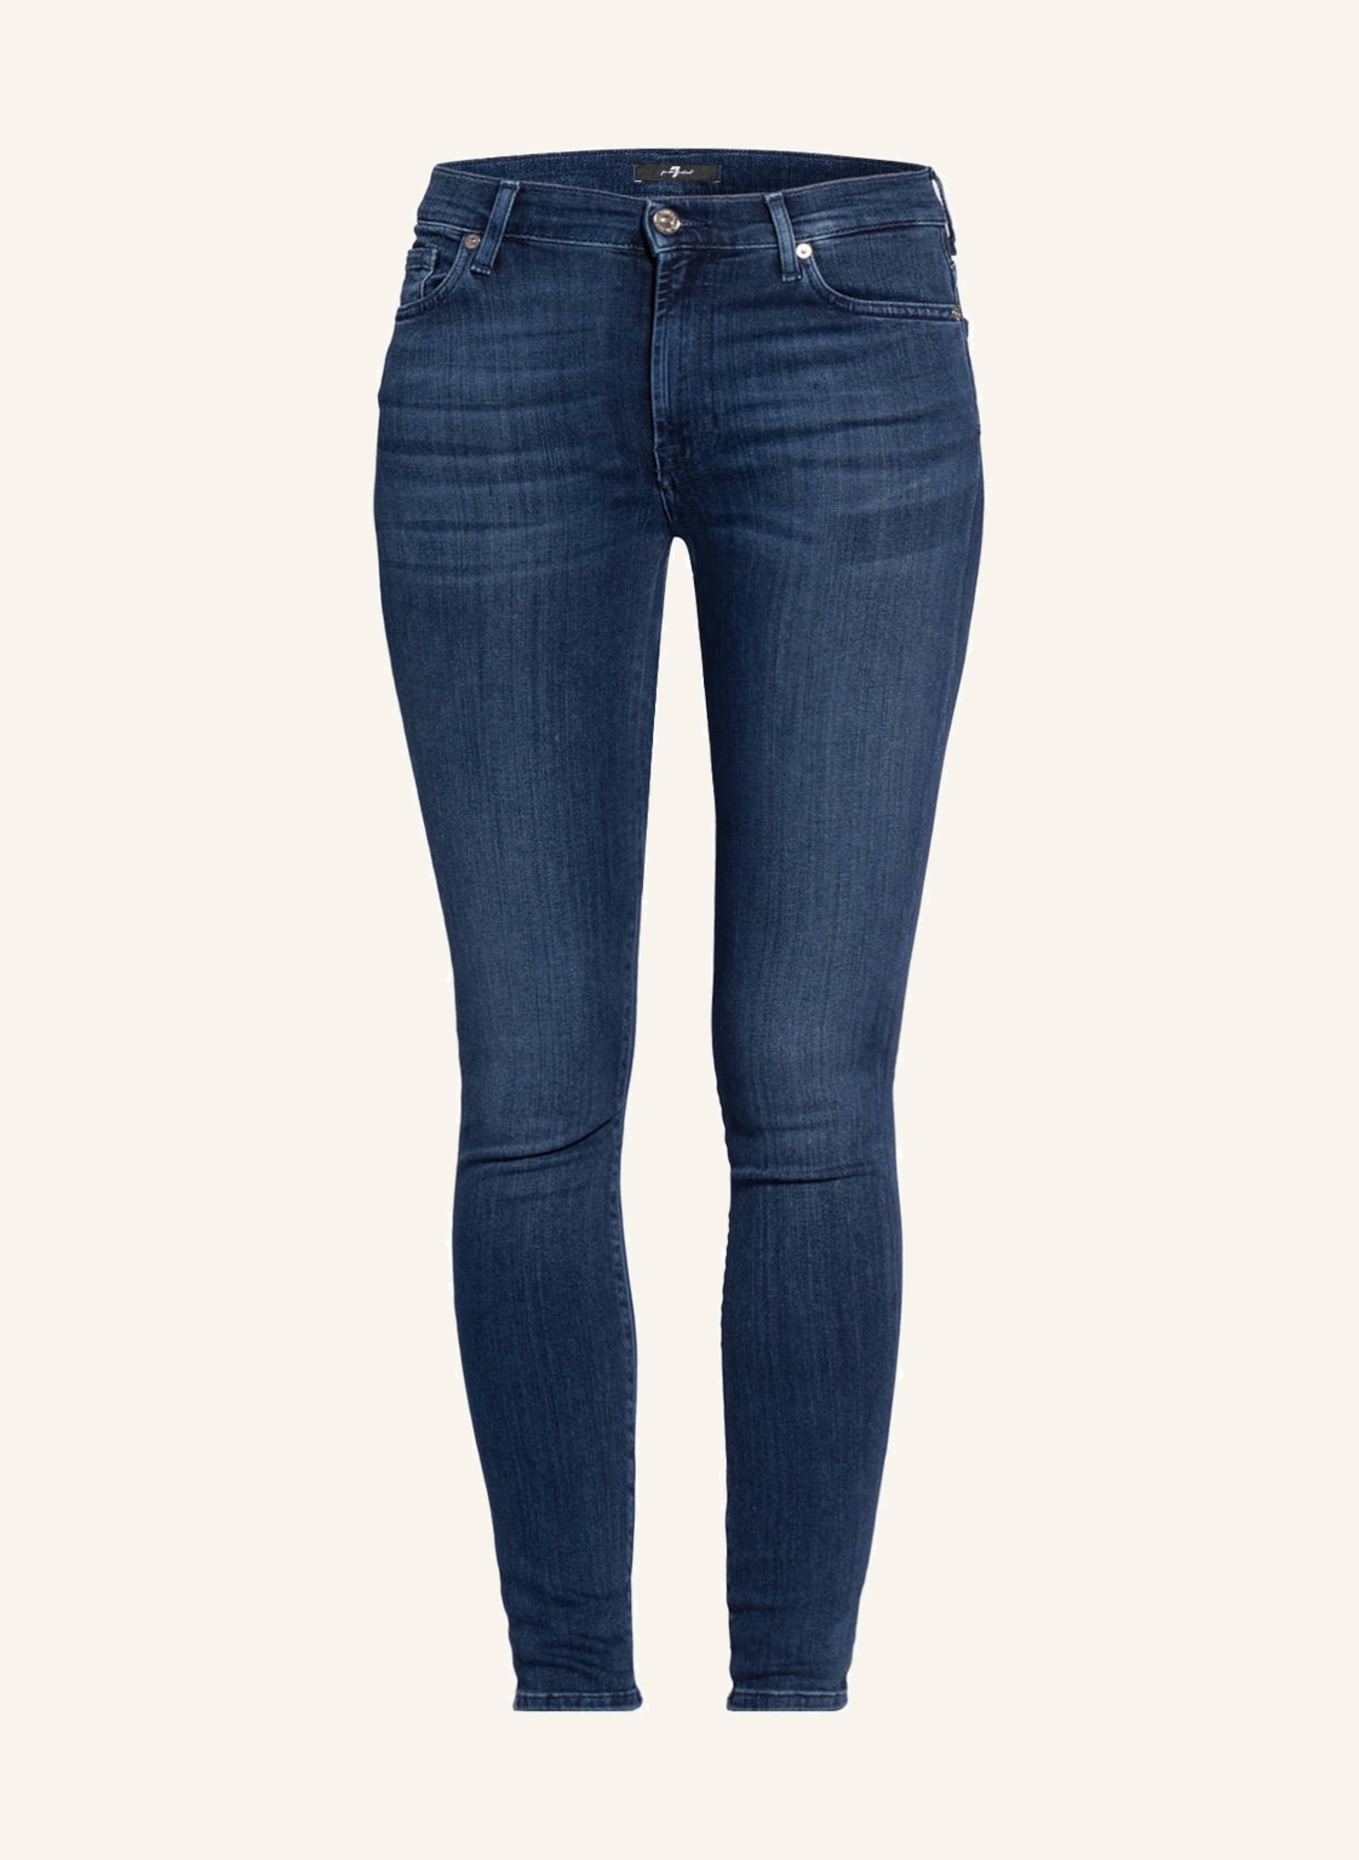 7 for all mankind Skinny Jeans, Farbe: Slim Illusion Luxe Los Feliz DARK BLUE (Bild 1)